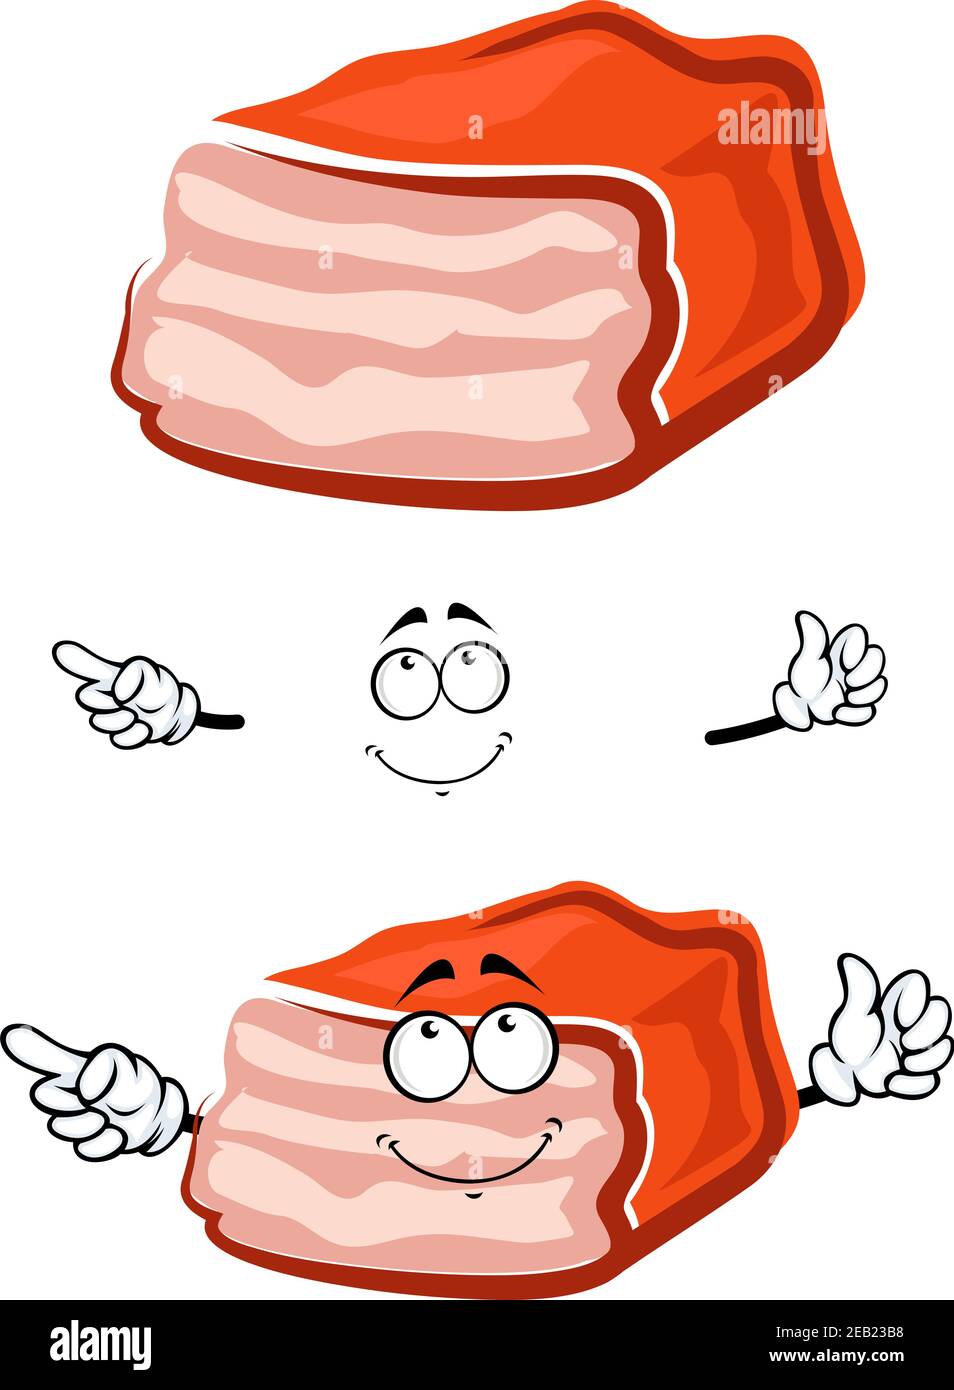 meatloaf sandwich clip art